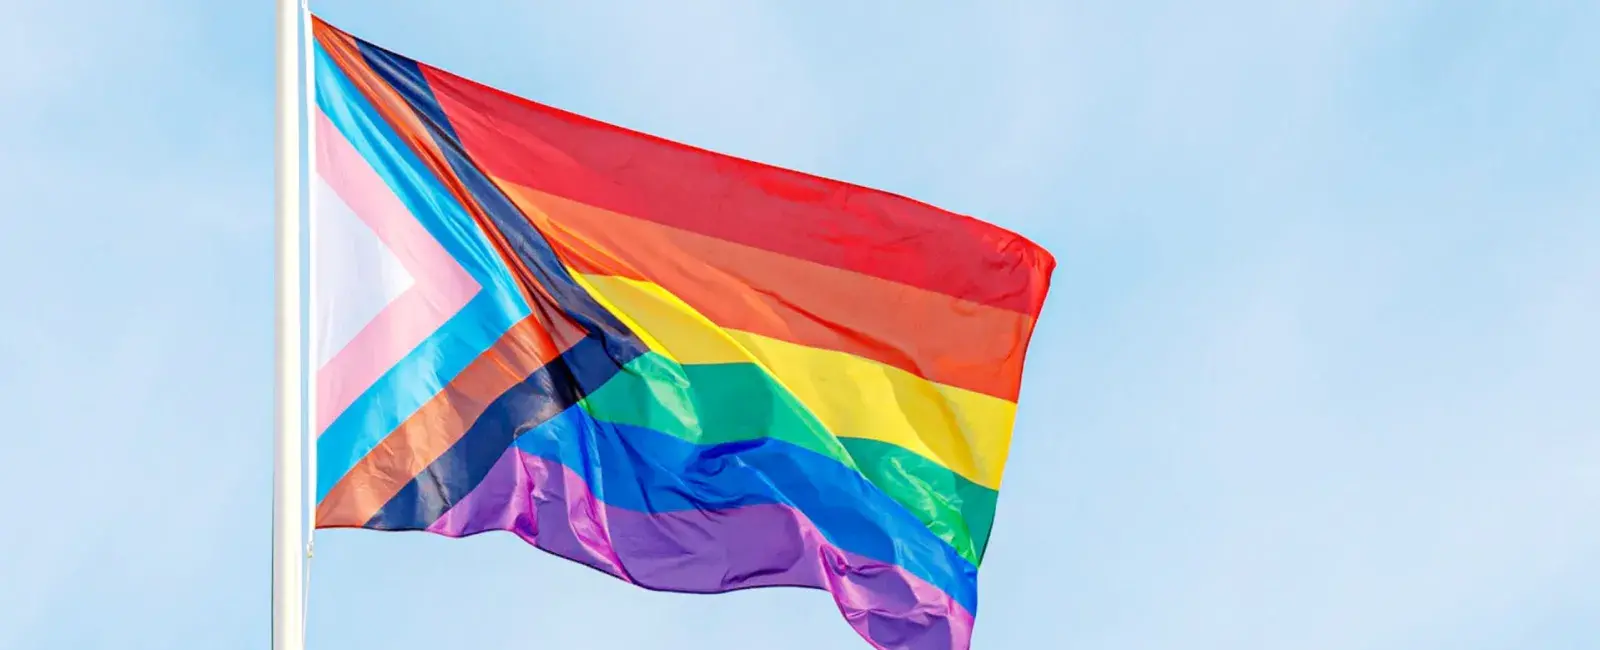 progress pride flag